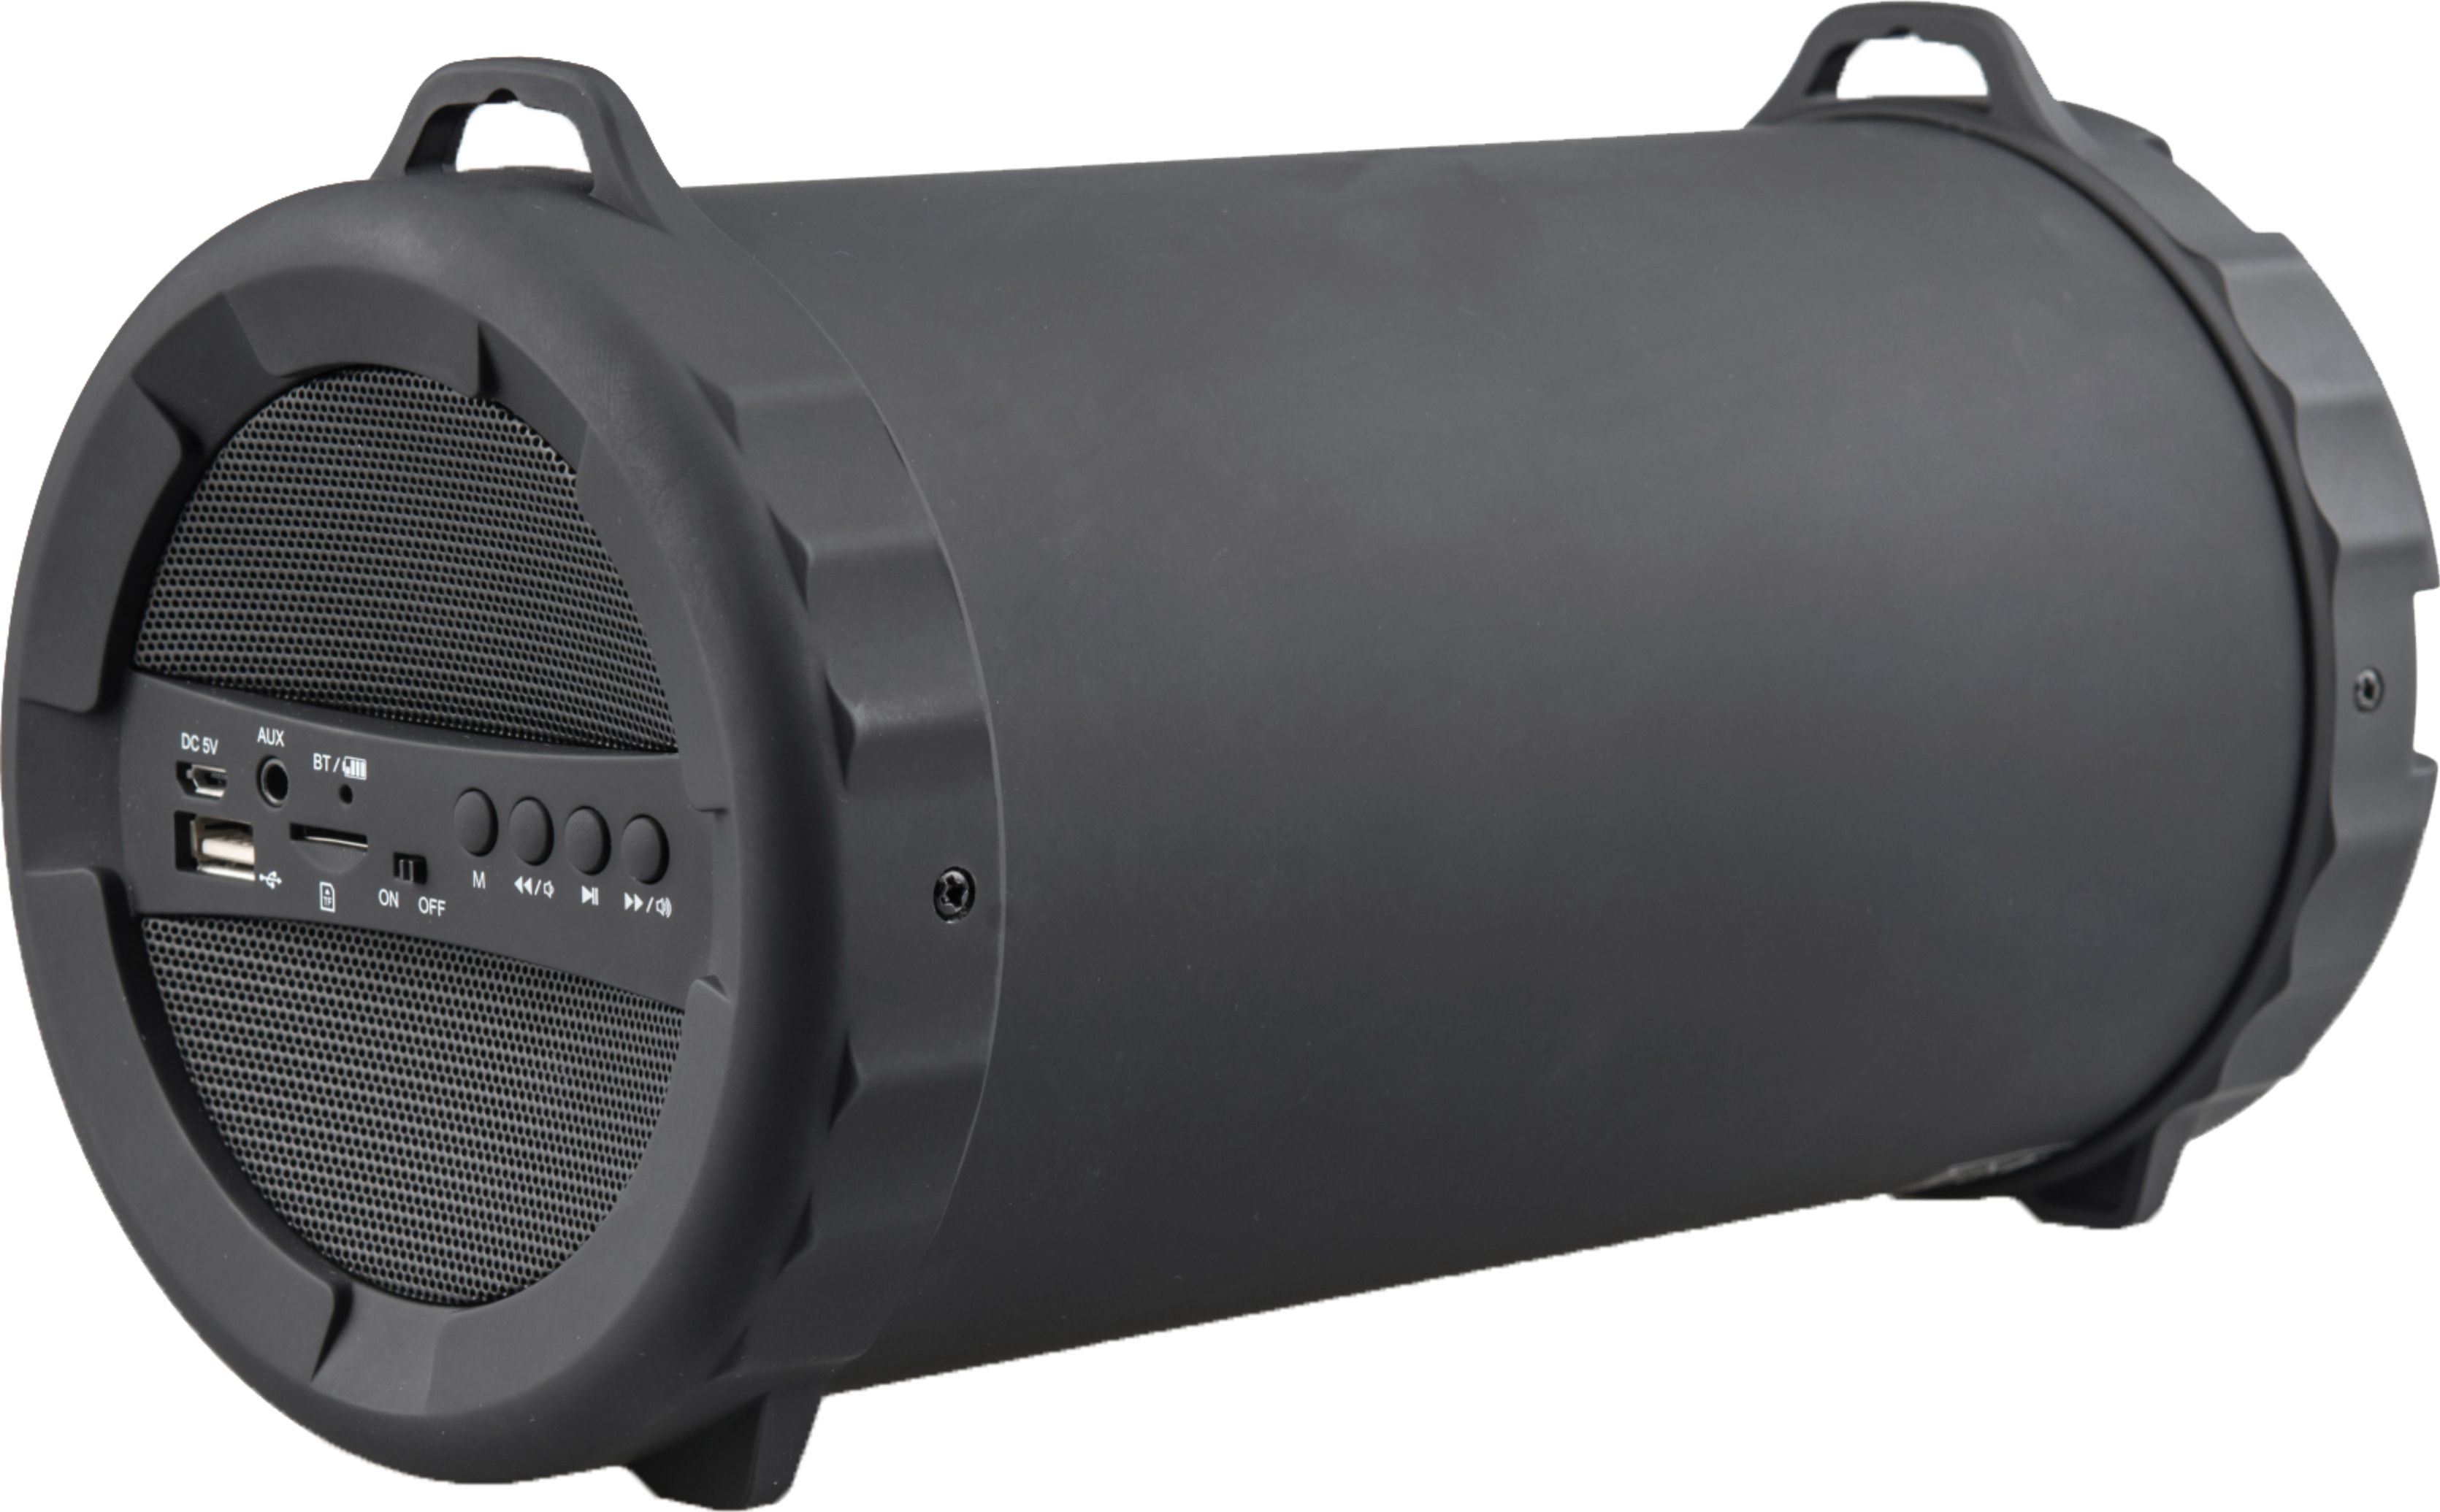 jvc bluetooth speaker price